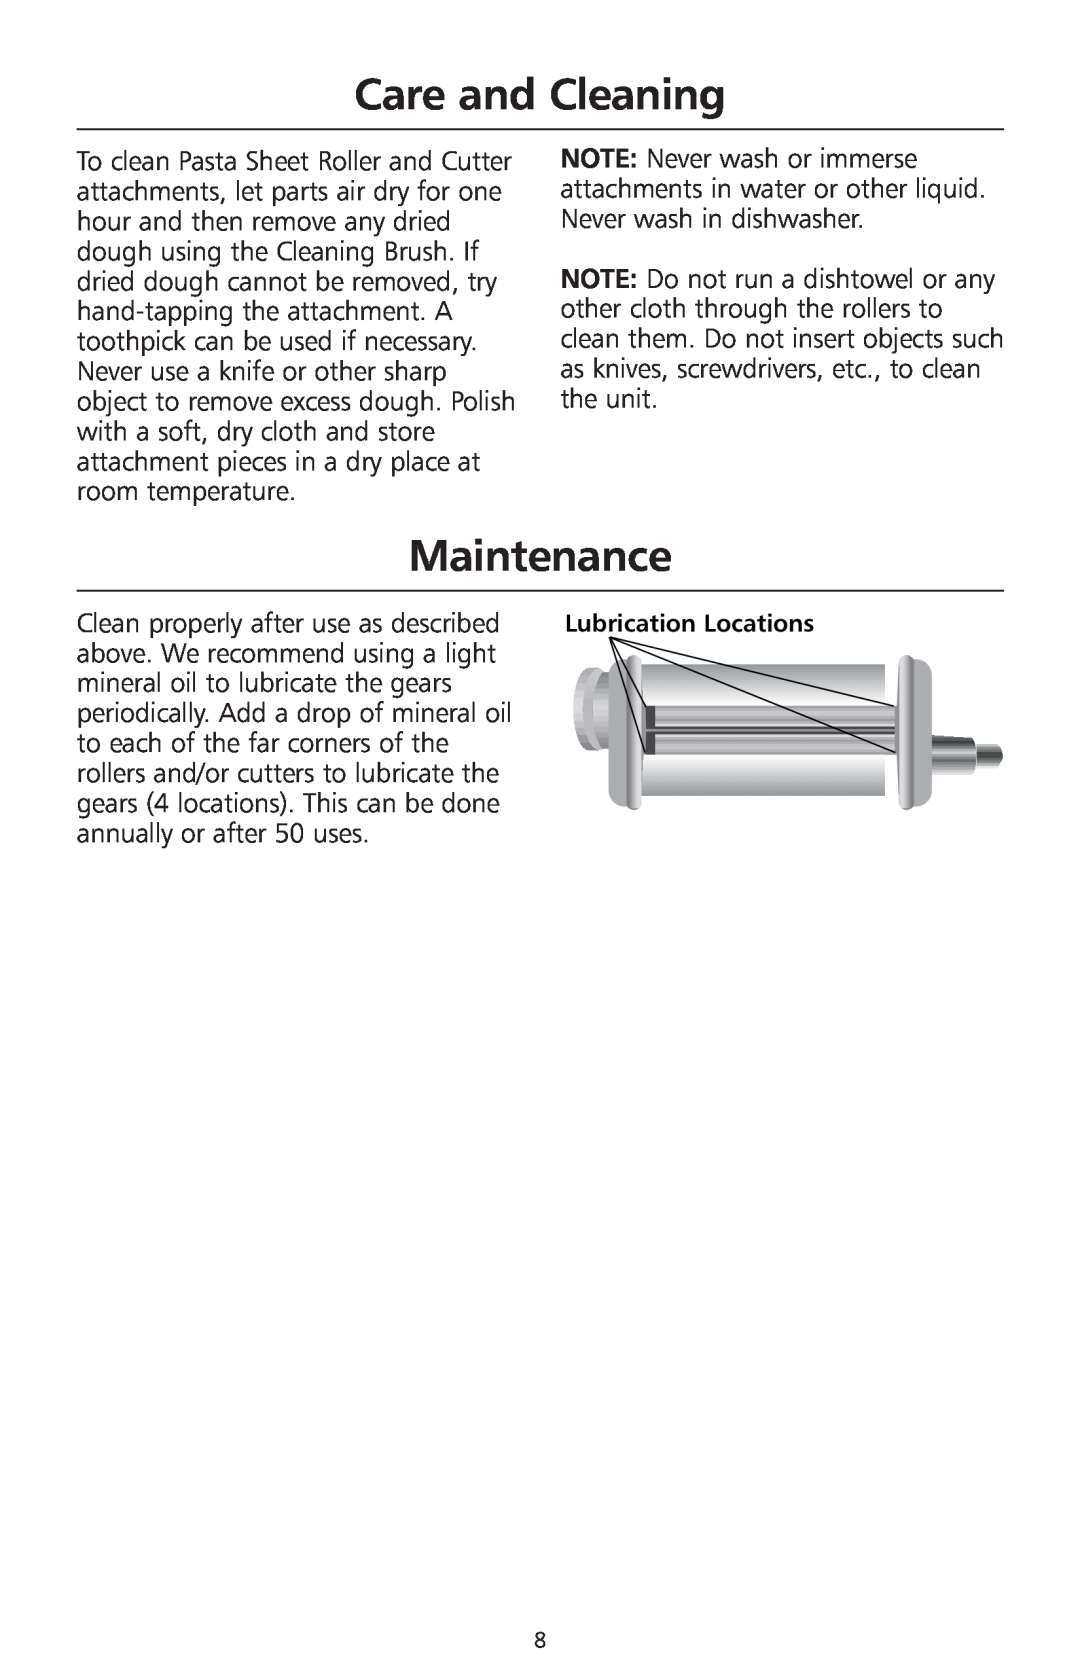 KitchenAid KPRA manual Care and Cleaning, Maintenance 